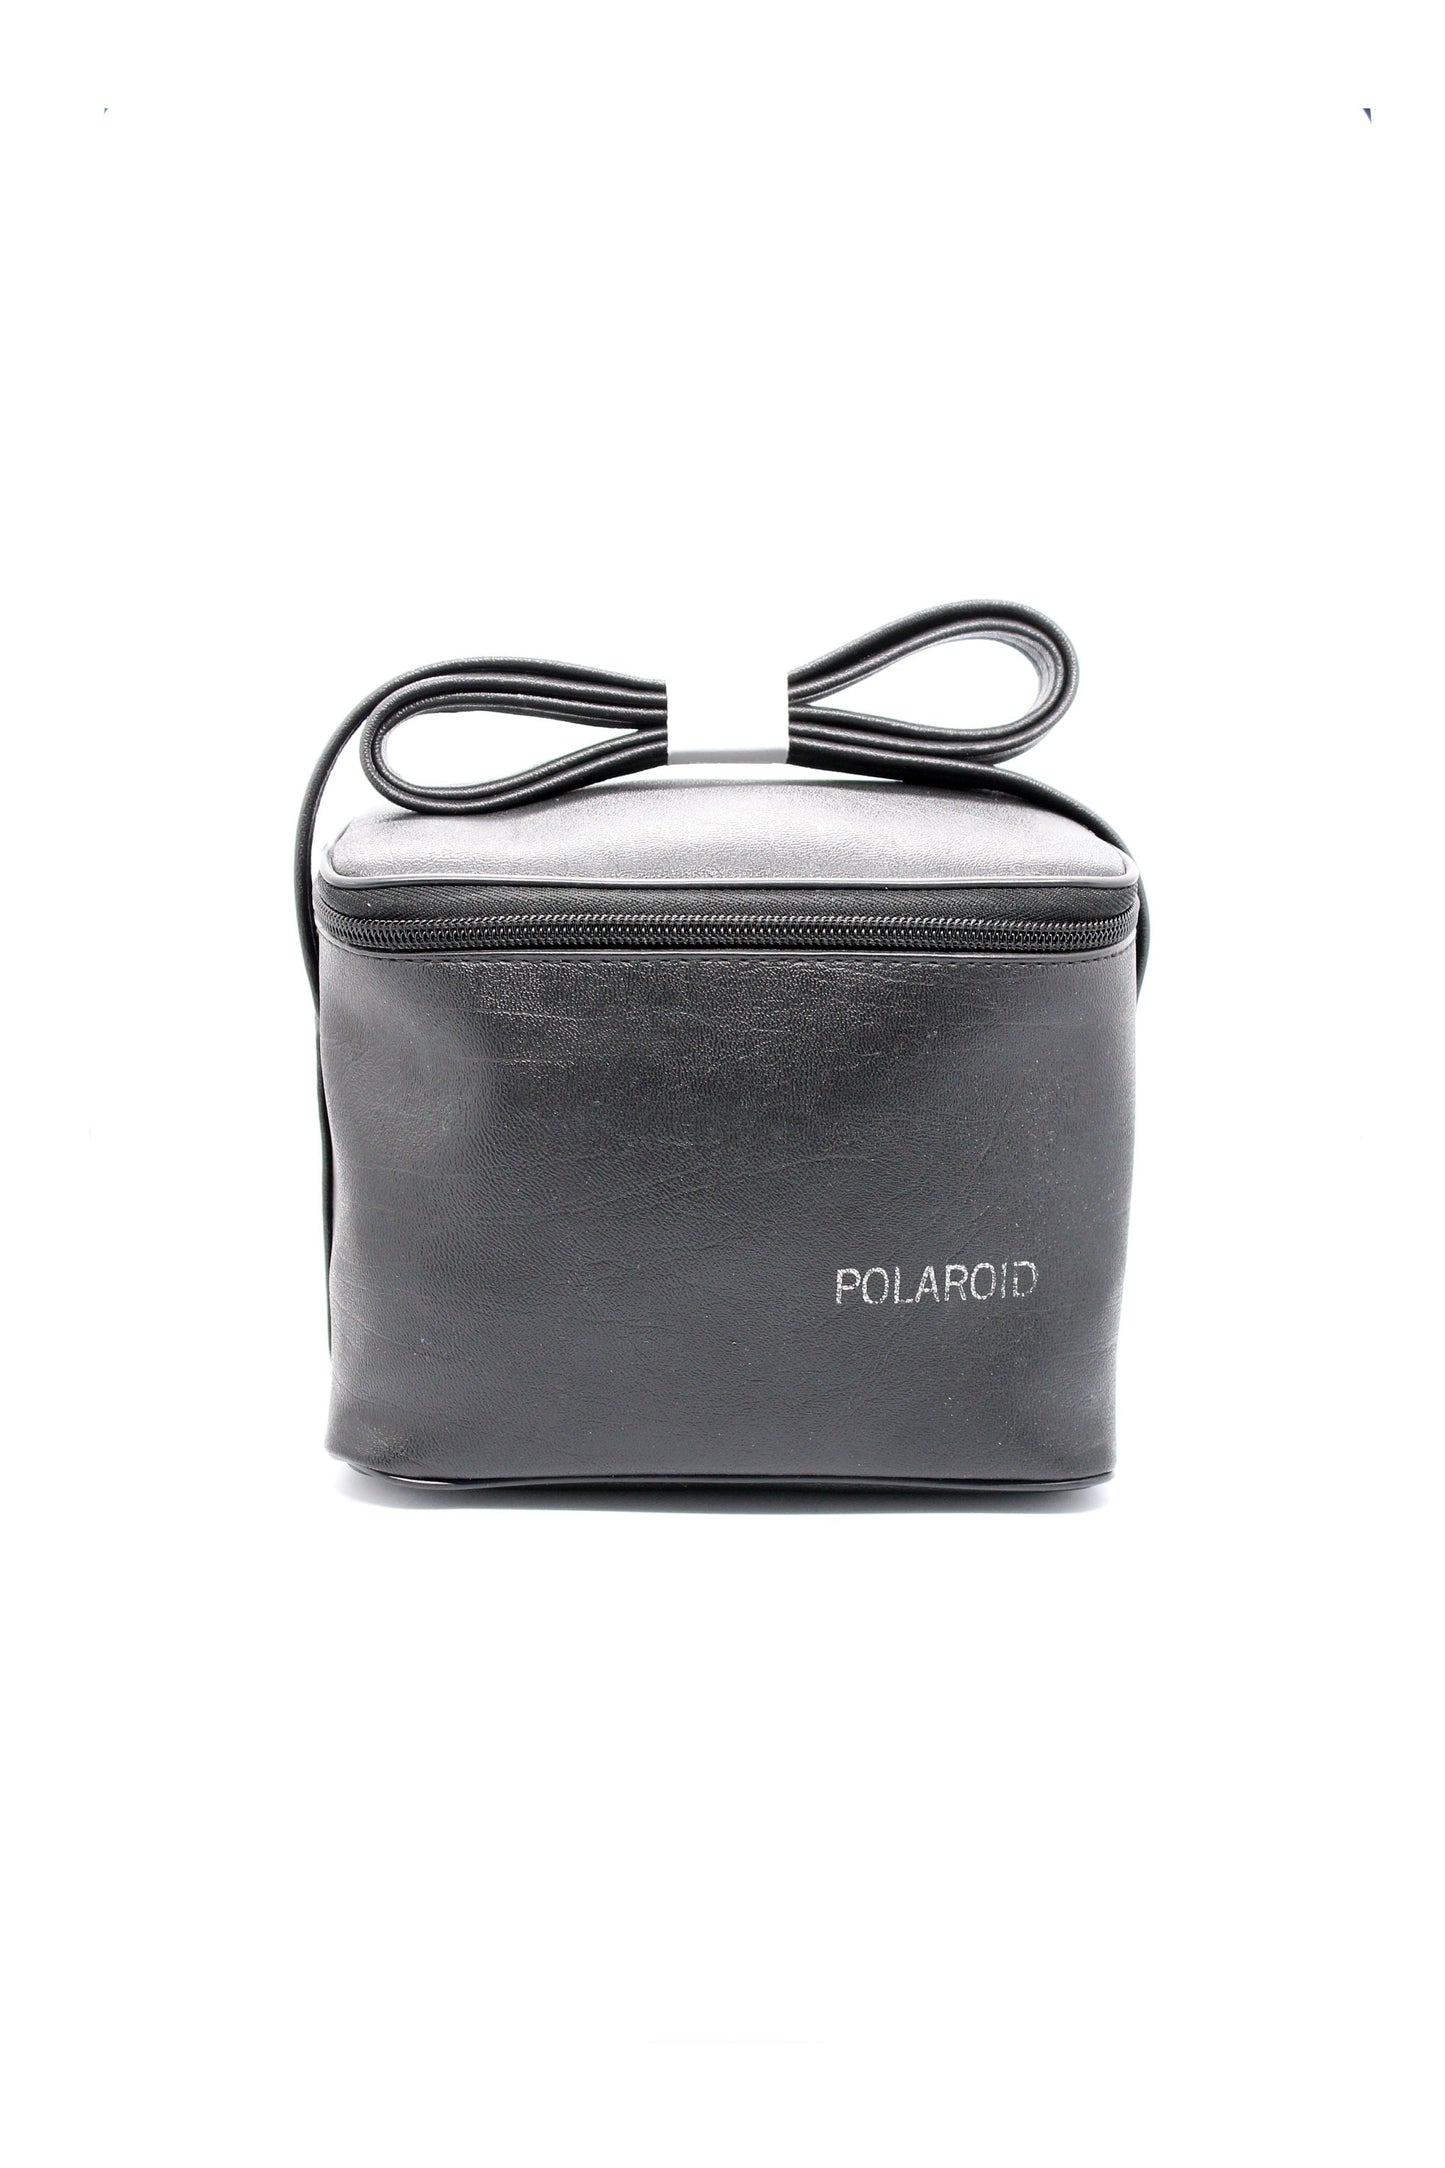 Polaroid Transport Bag - Polaroid Carry Case - Model Polaroid II